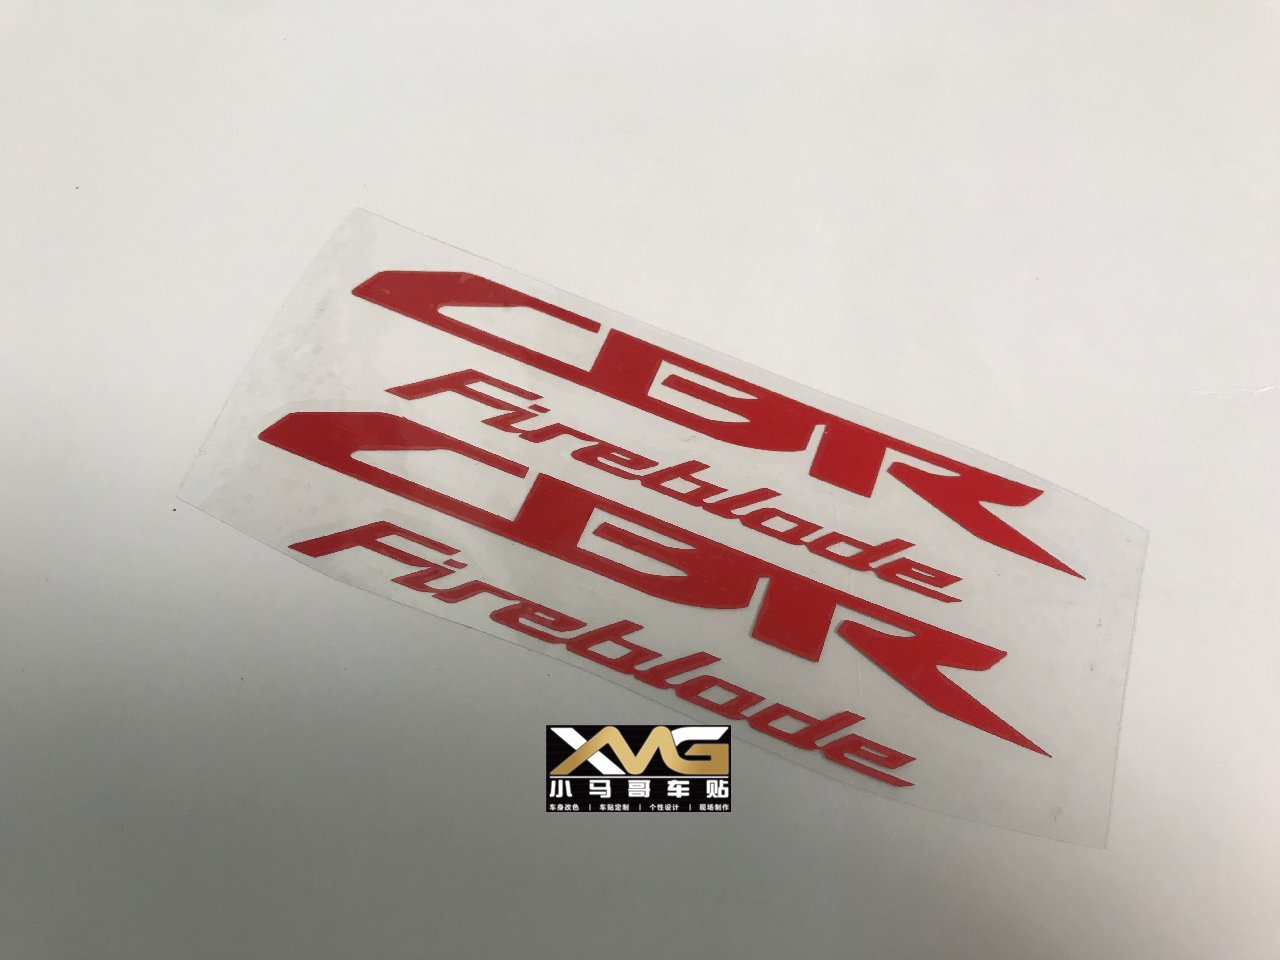 CBR Fireblade油箱贴花/CBR900RR 1000RR本田摩托车身外壳车贴纸